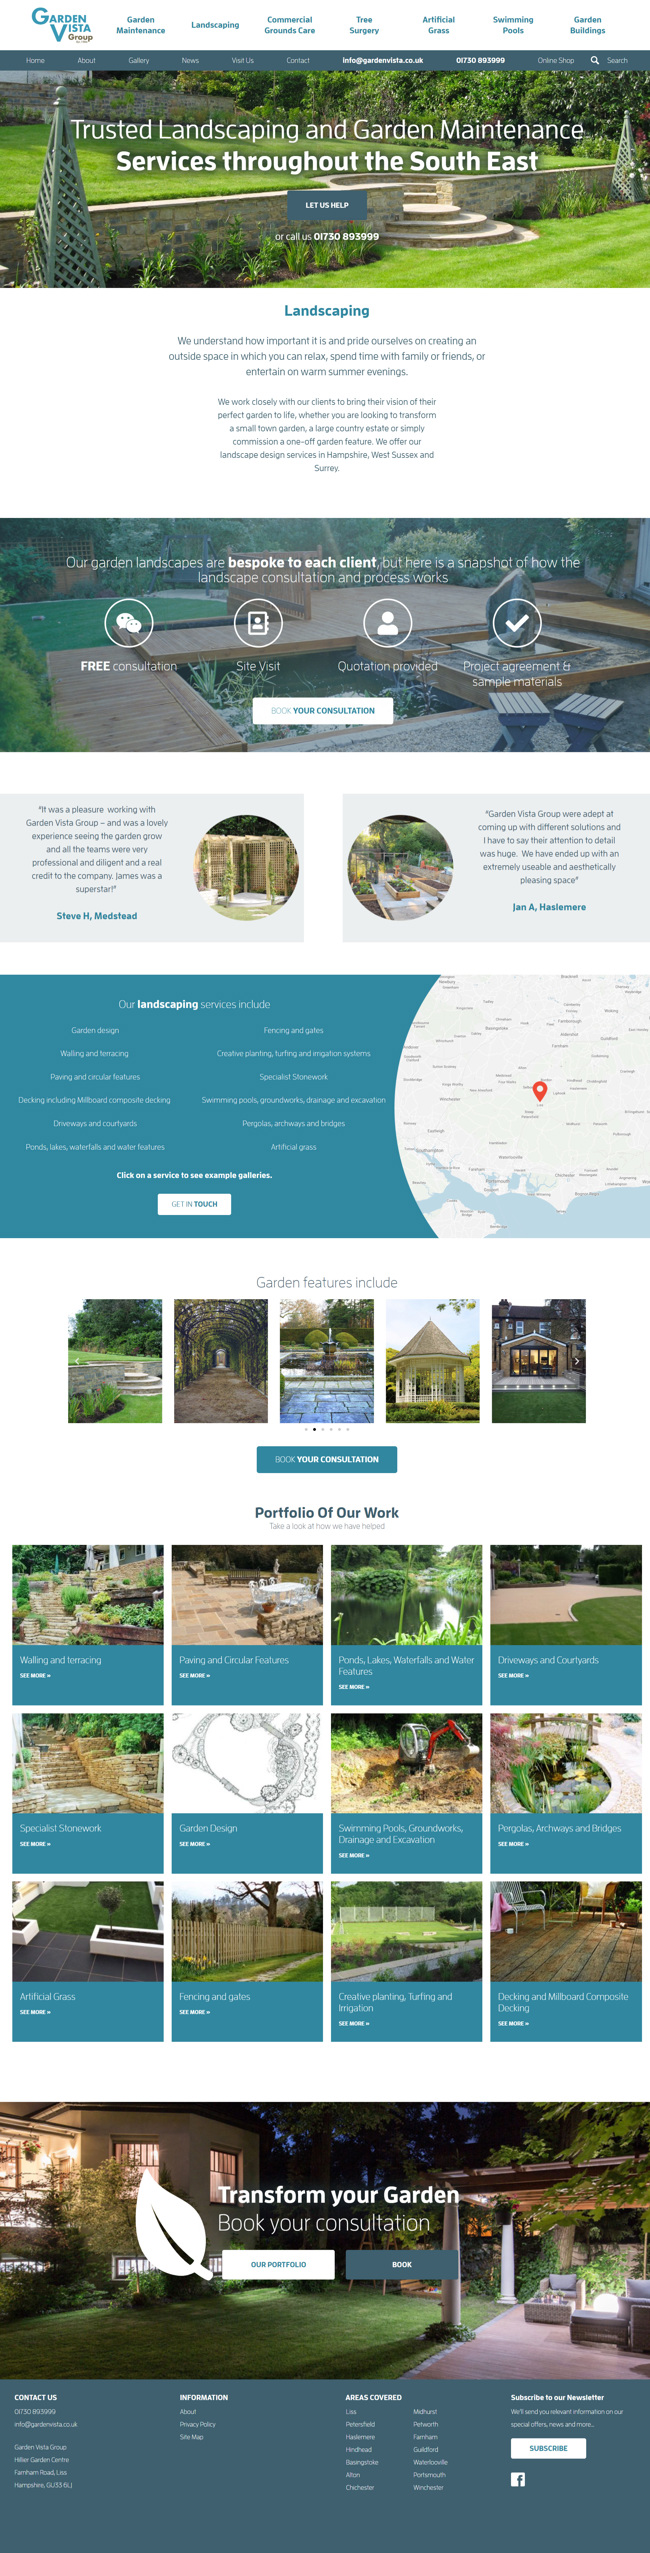 Garden Vista Group Website Design and WordPress Development SP003 Landscaping